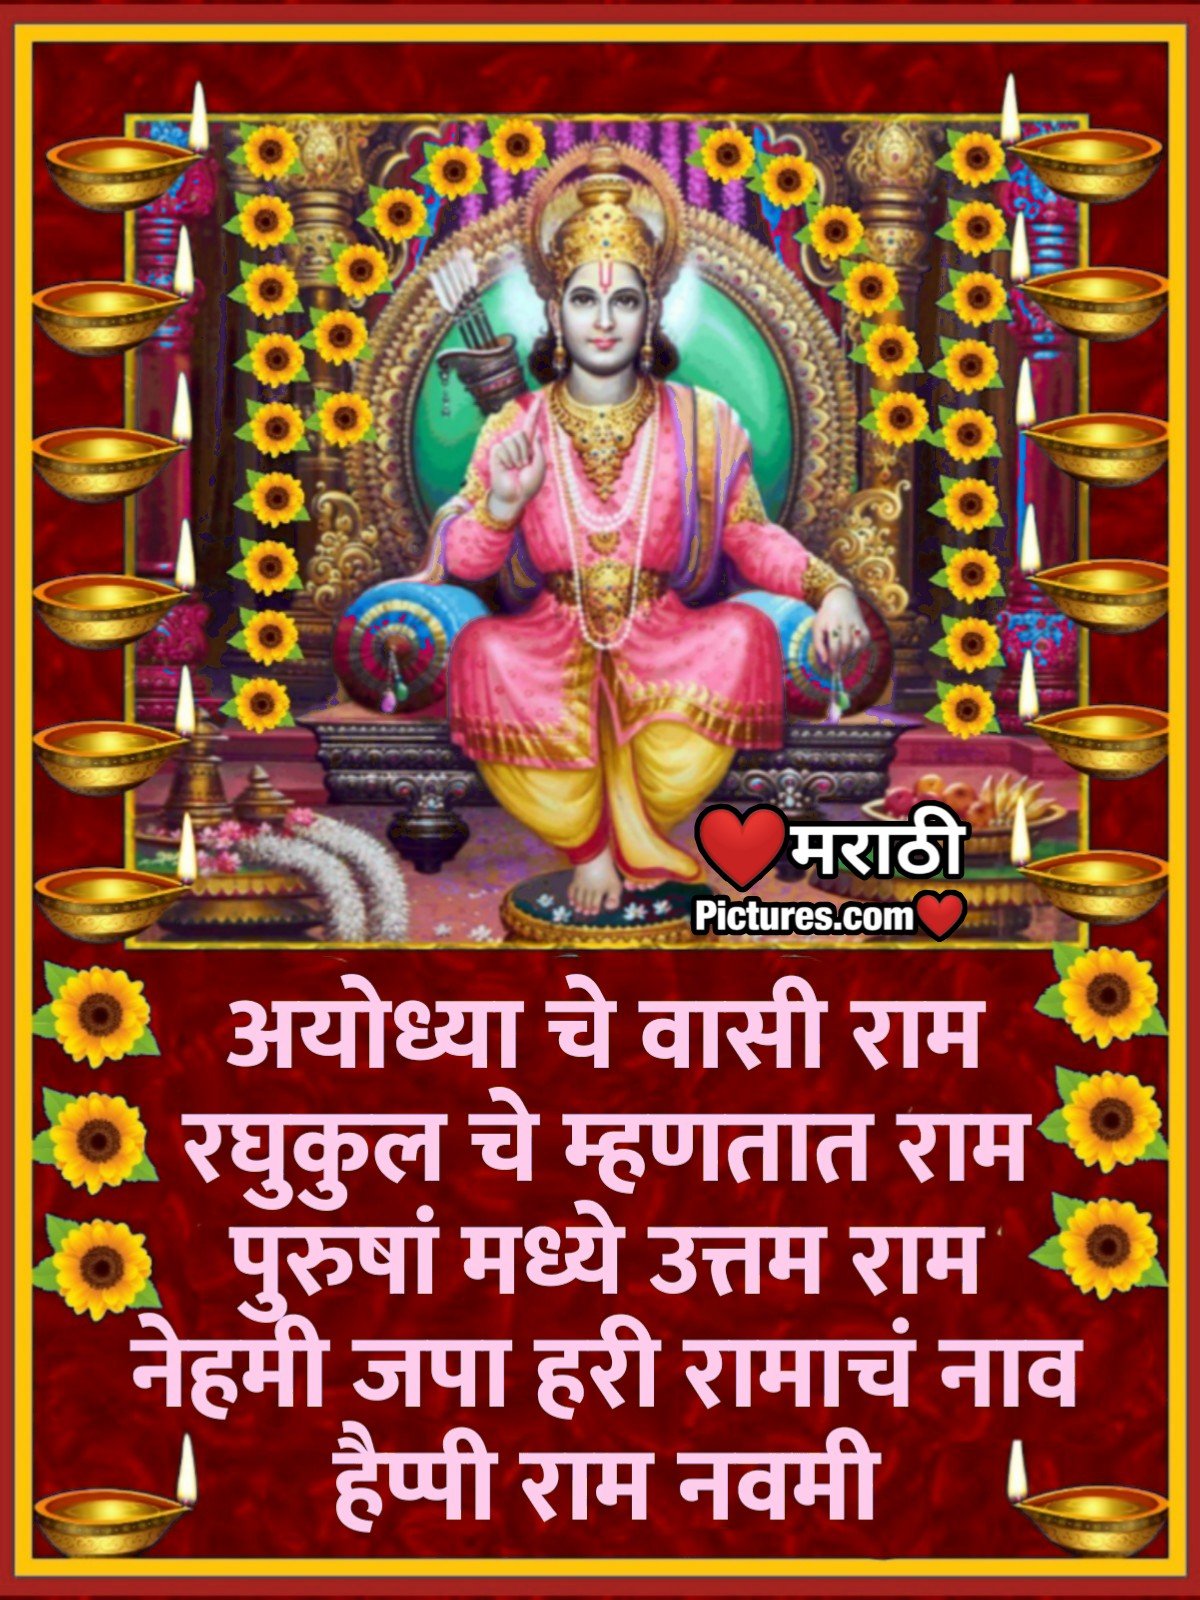 Happy Ram Navami Wish In Marathi